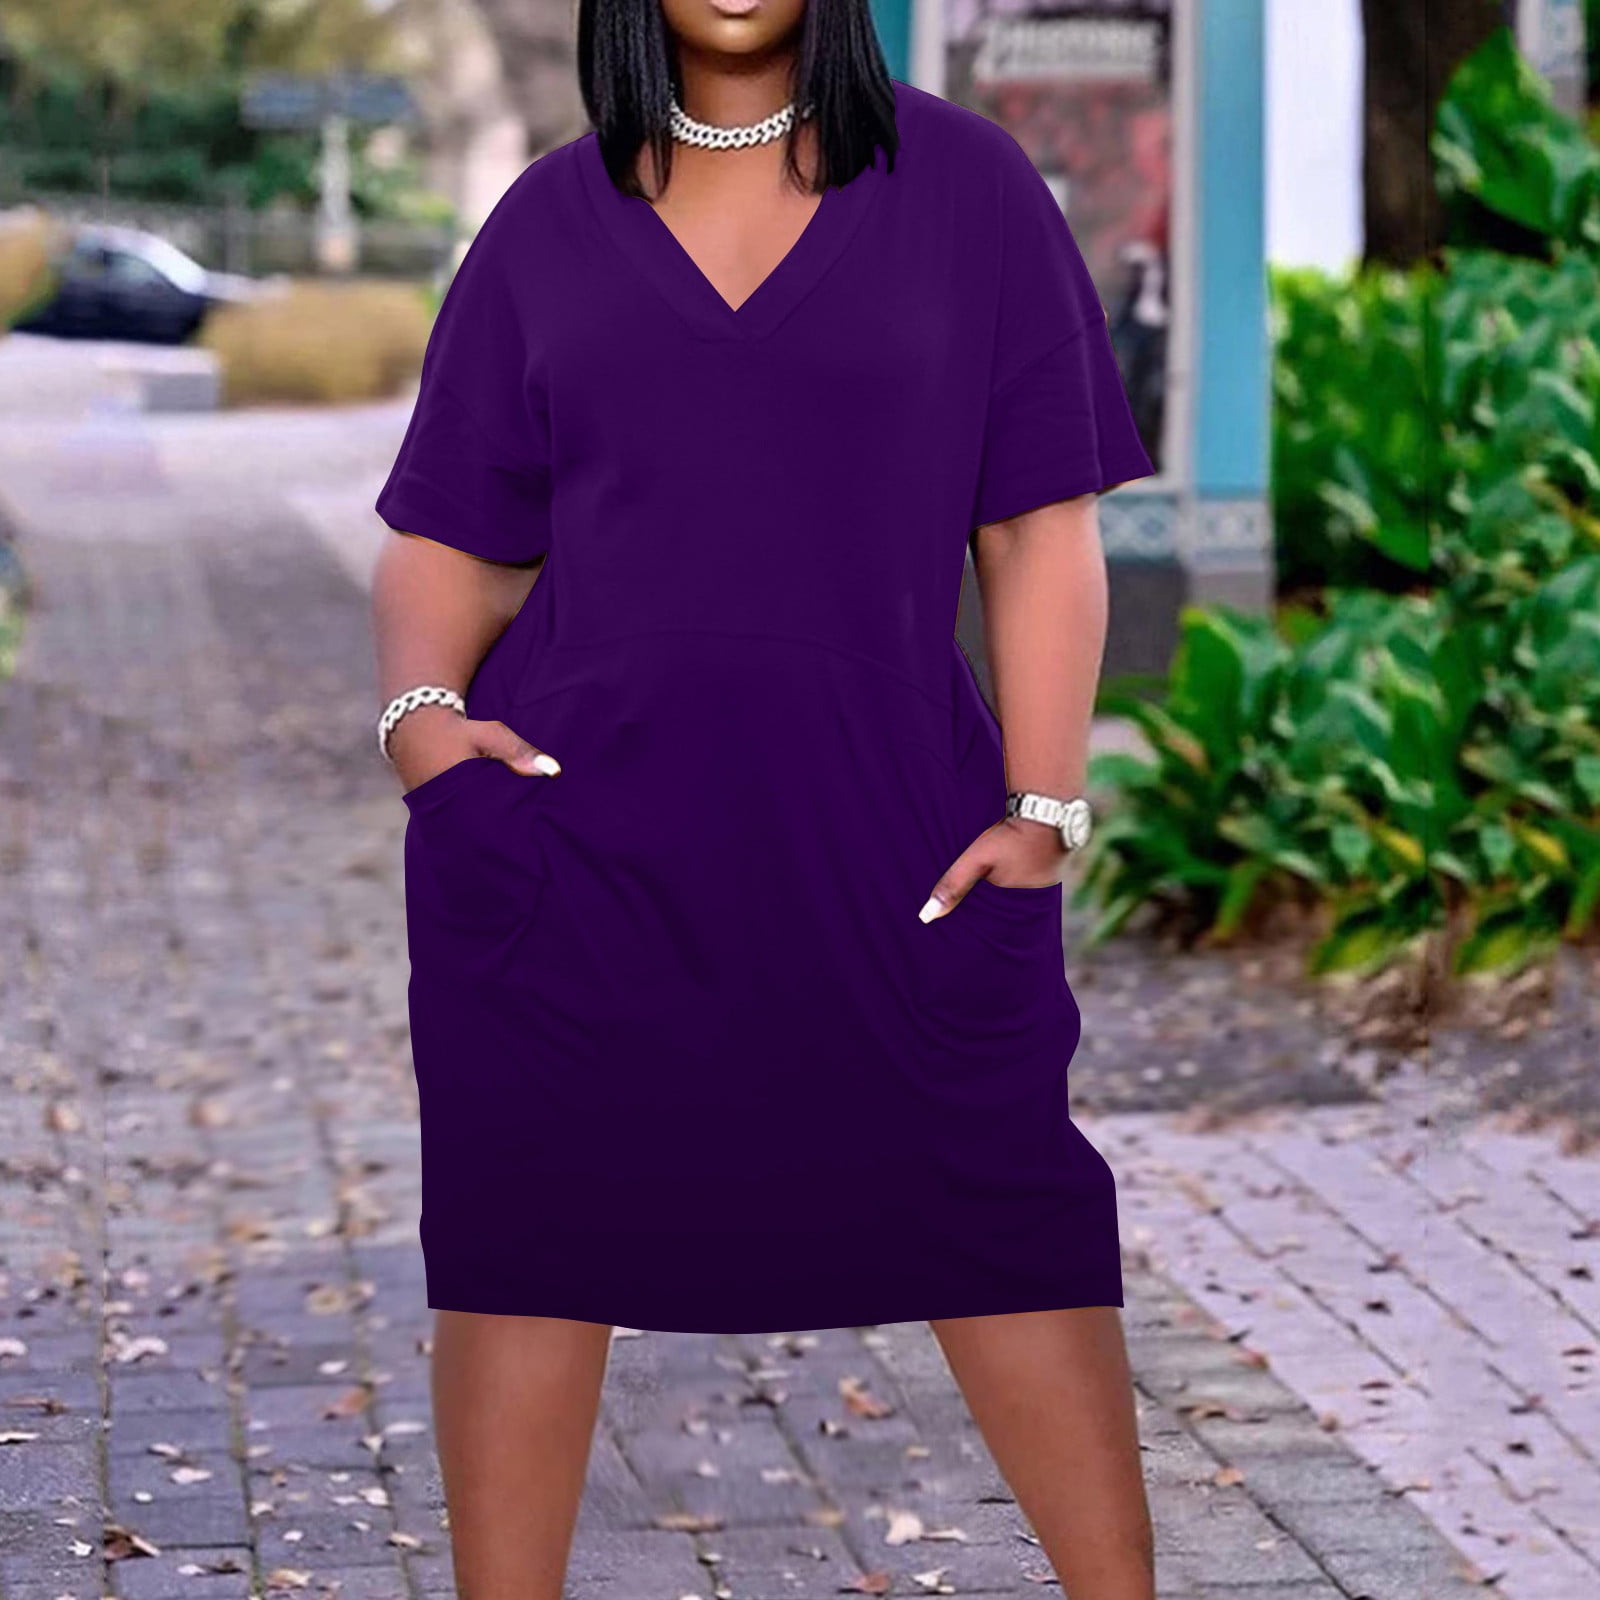 Usmixi Formal Dresses for Women Casual Size Swing Tunic Dresses with Pocket V-Neck Short Sleeve Solid Summer Midi Dress Purple XXXXL - Walmart.com